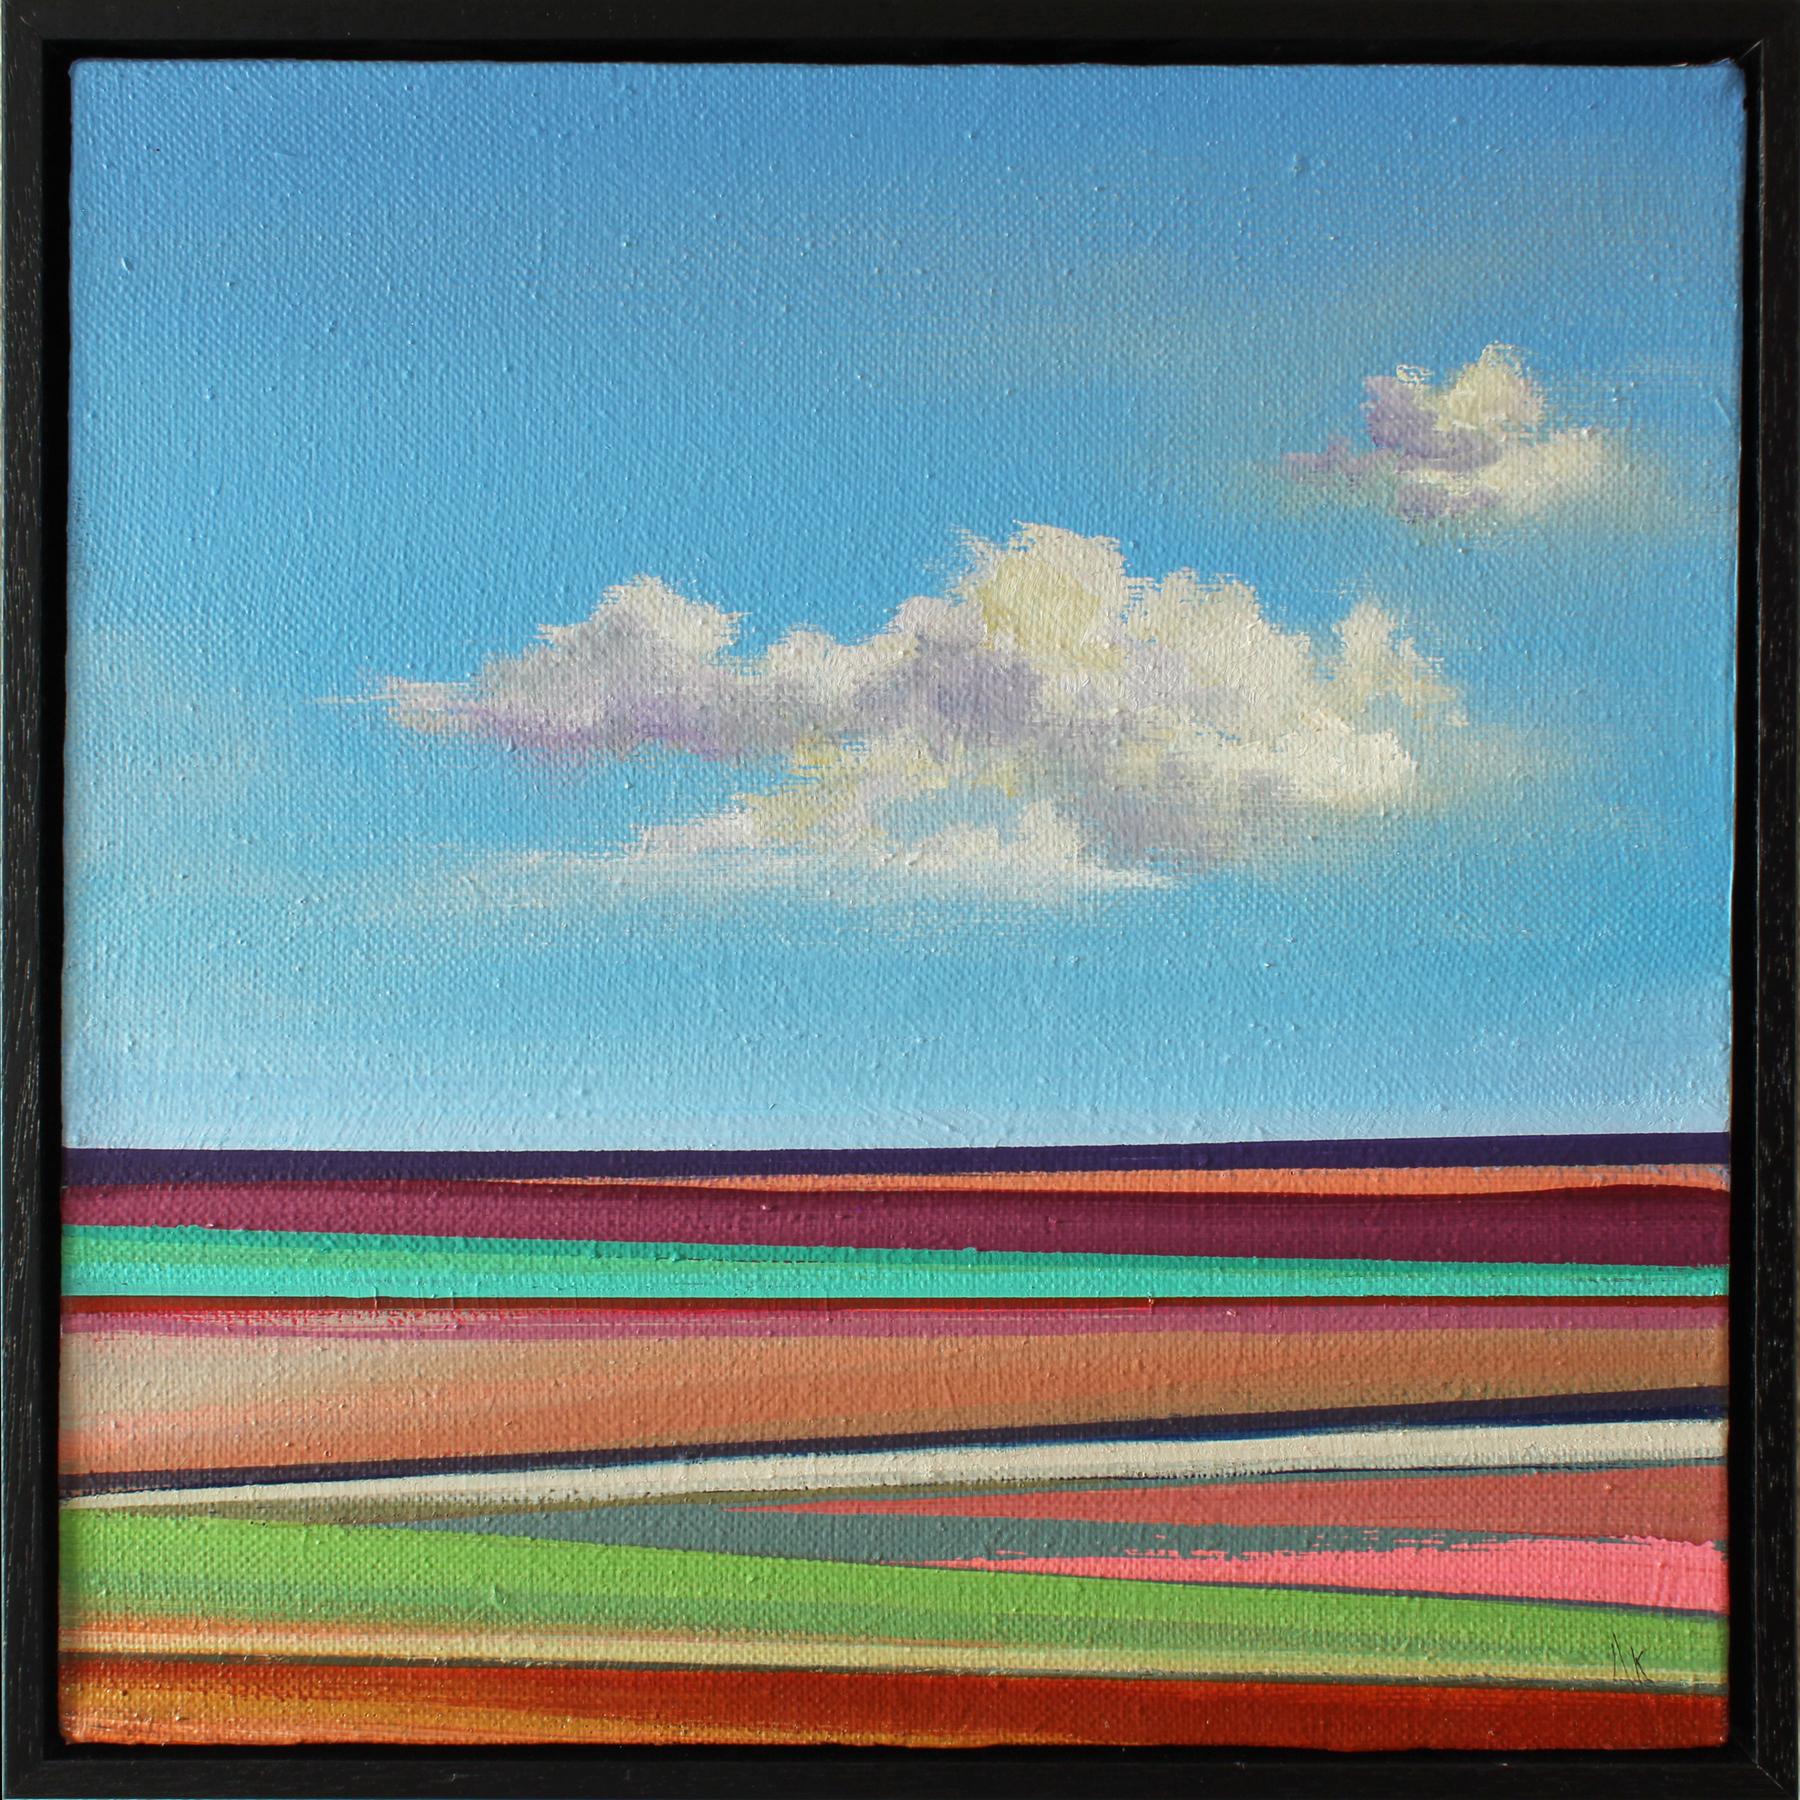 Alyson Kinkade Landscape Painting - Drift no.4 16x16" oil on linen